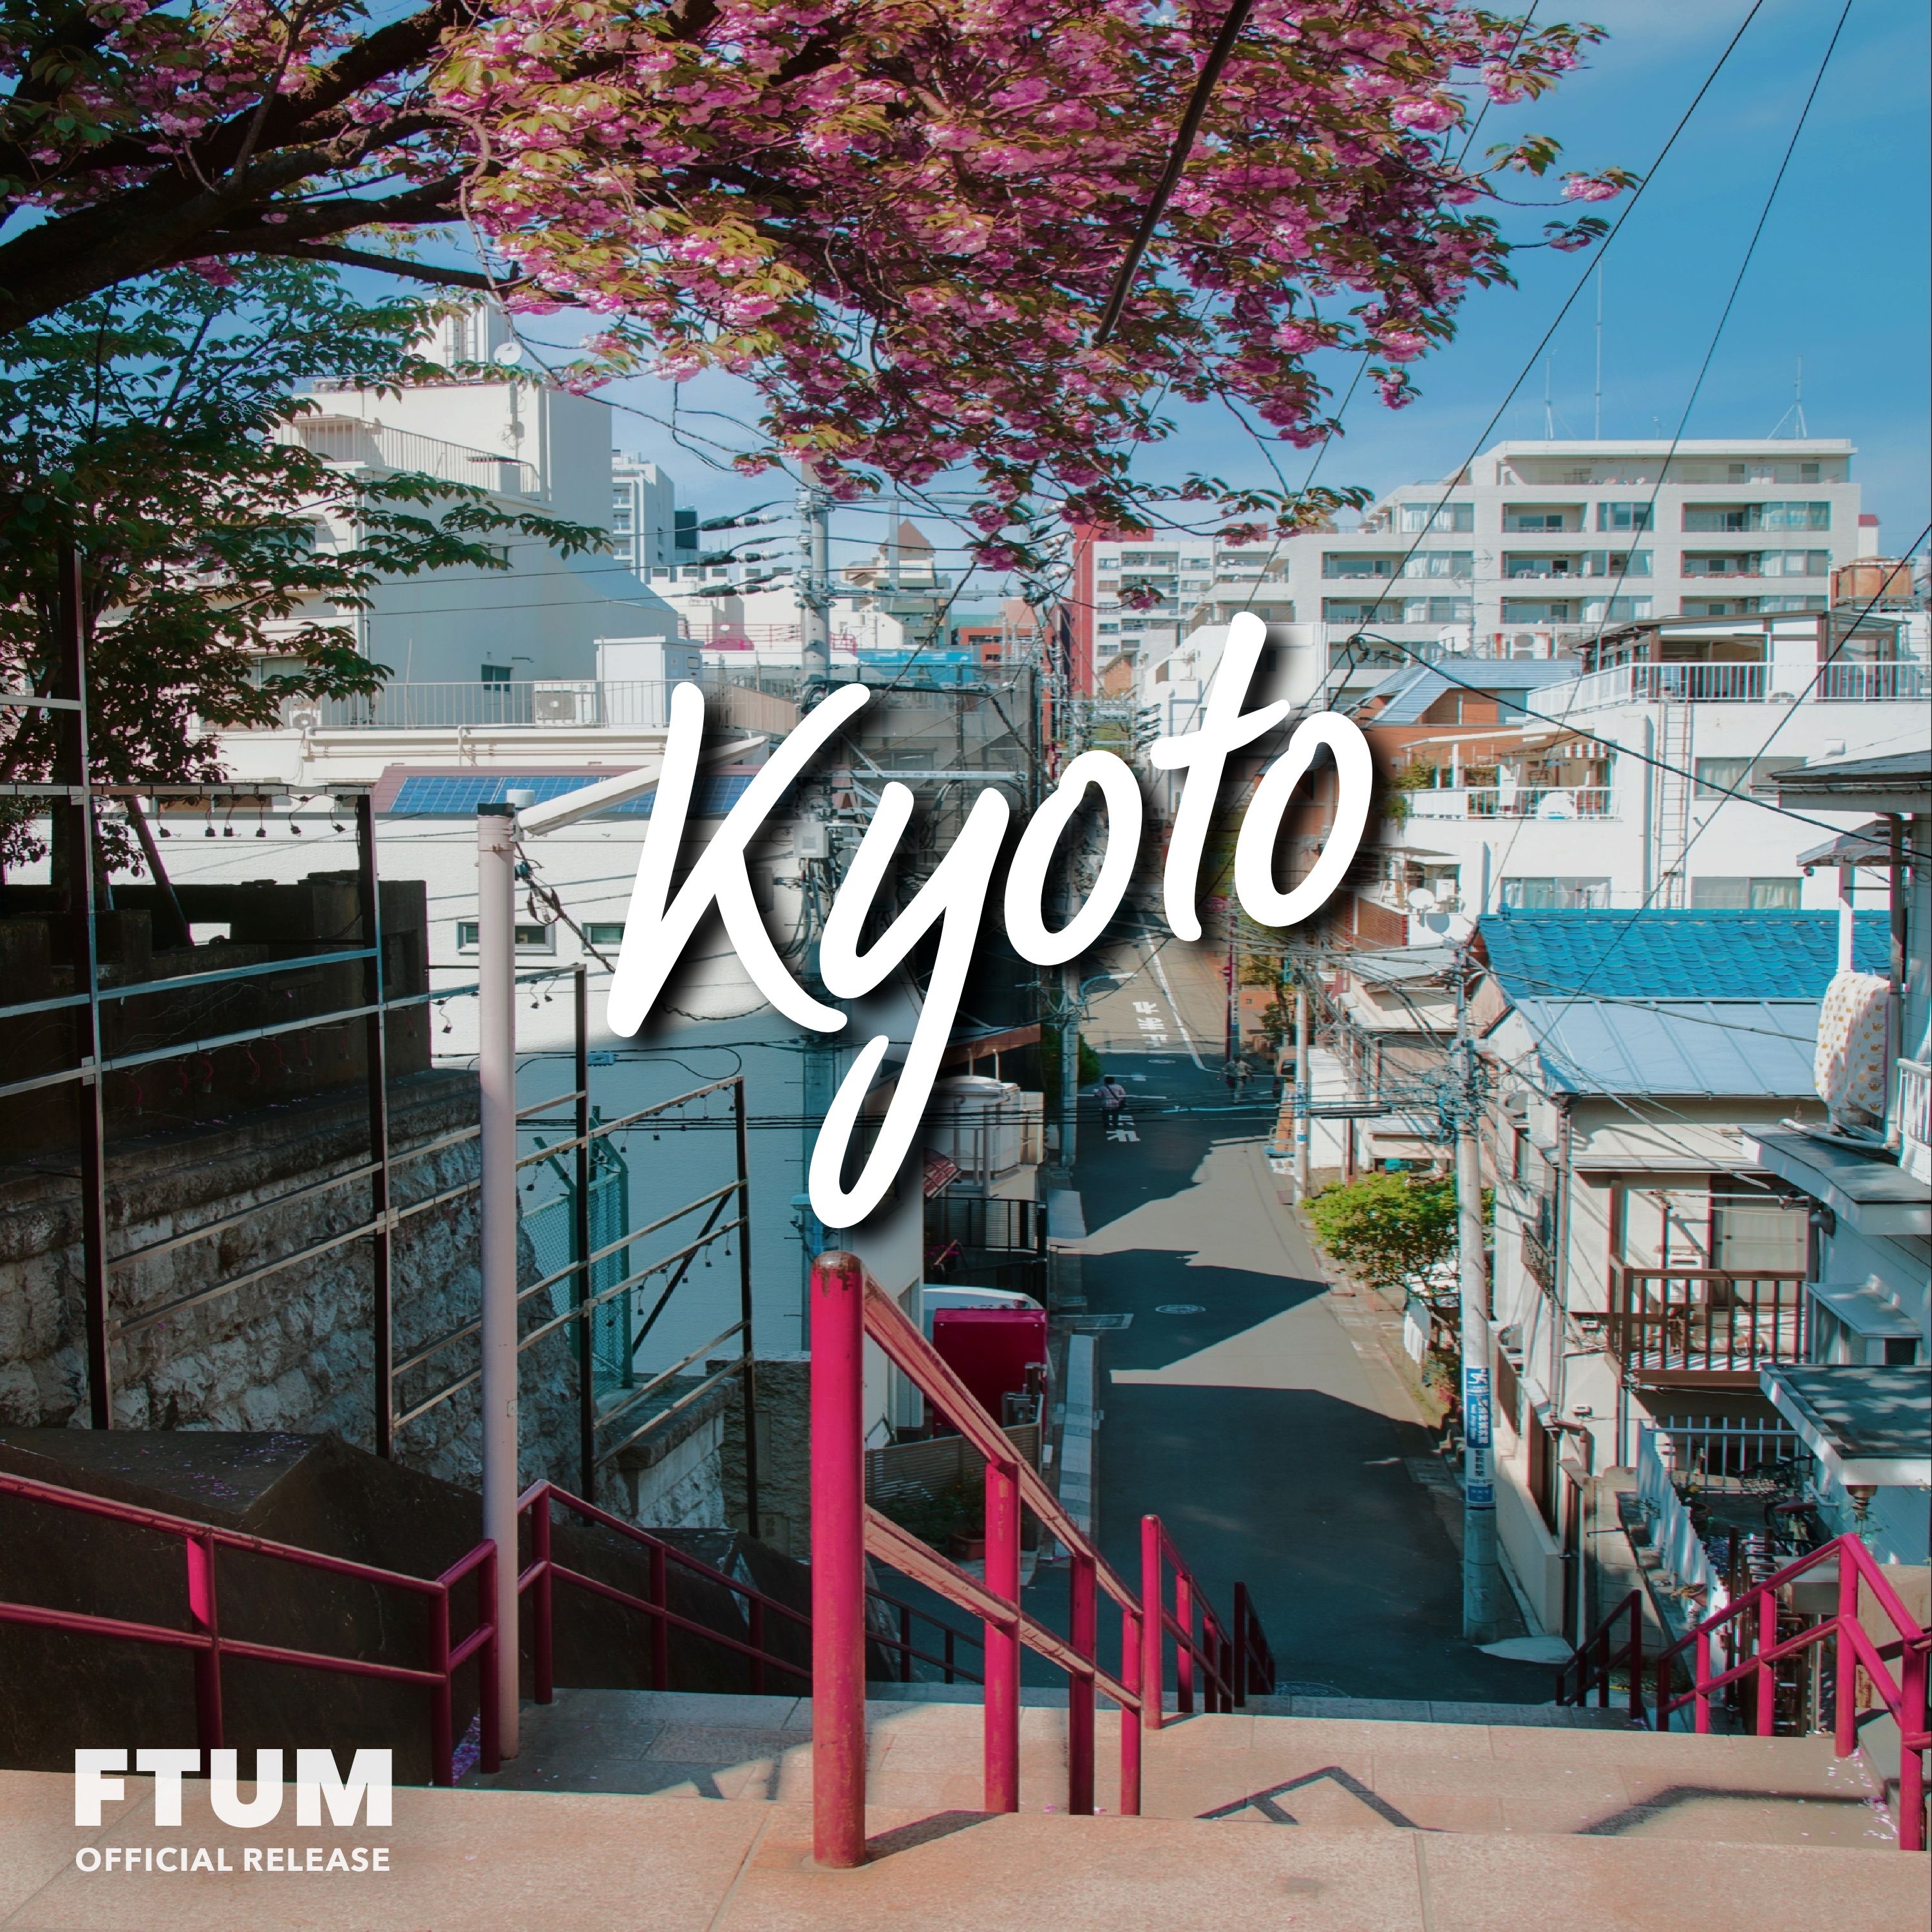 Descarregar Pratzapp & Another Kid - Kyoto [FTUM Release] · Aesthetic Lo-Fi Background Music